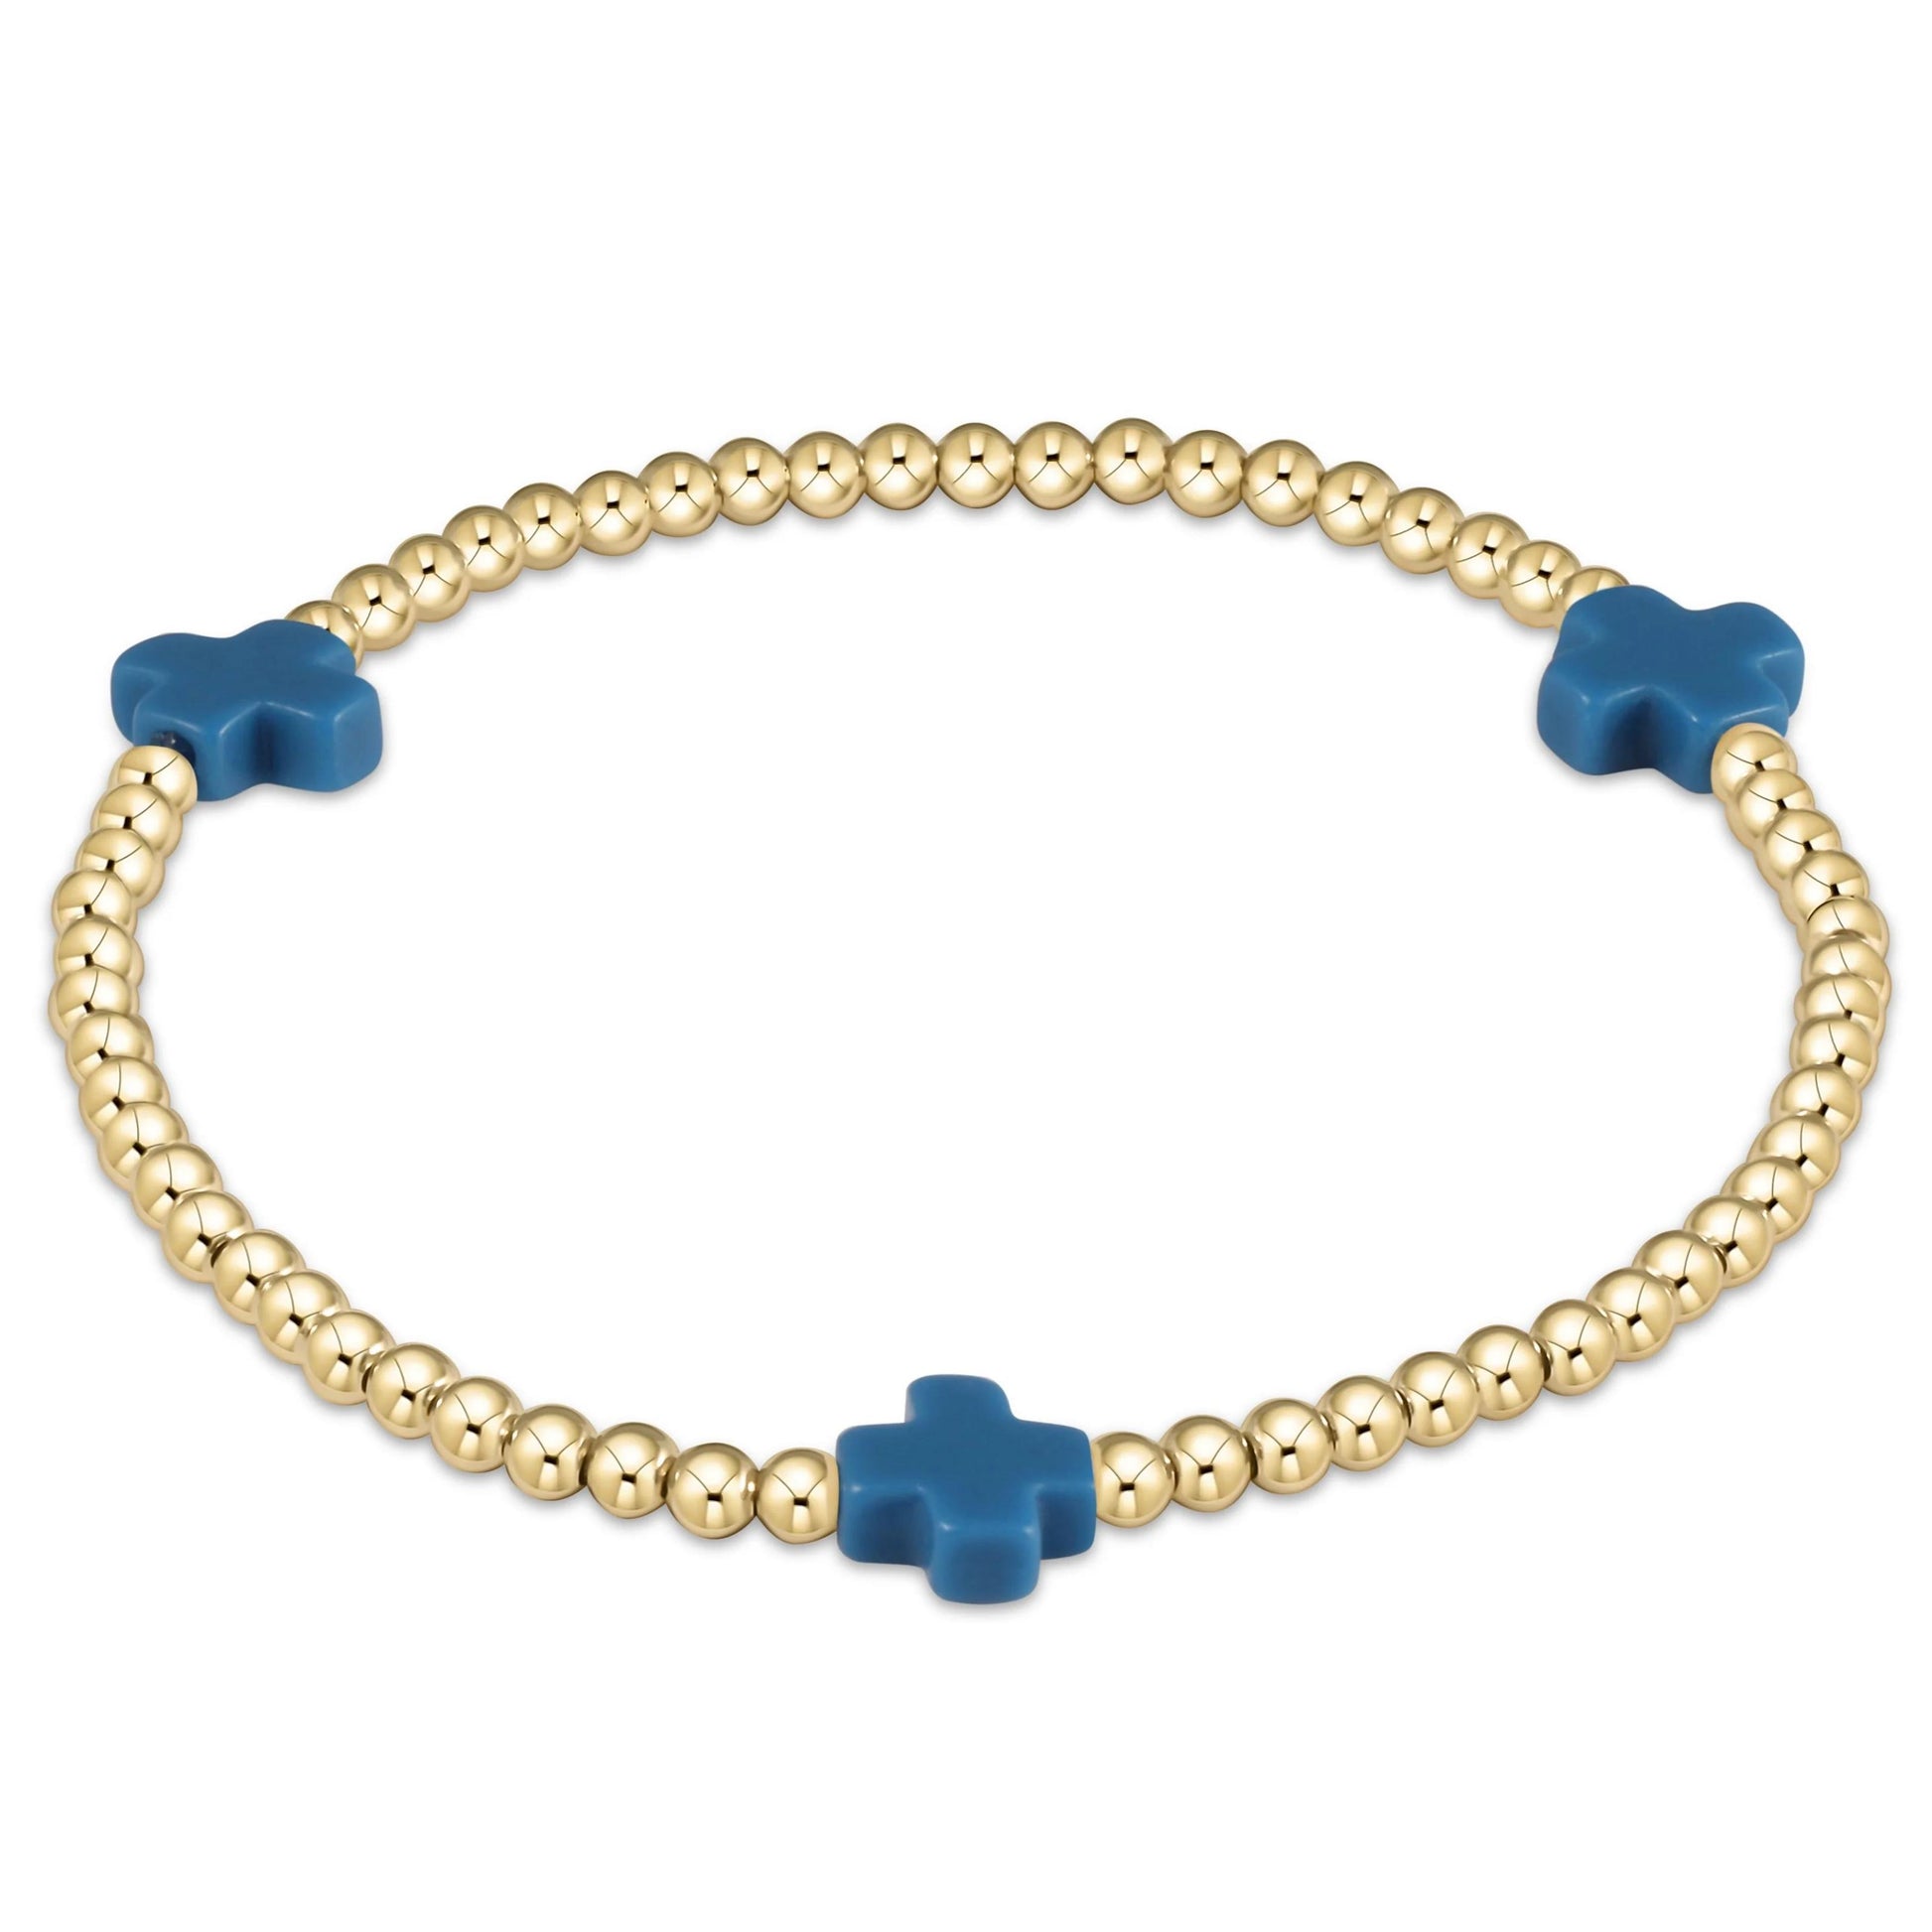 3mm Signature Cross Bracelet in Cobalt - The Village Jeweler